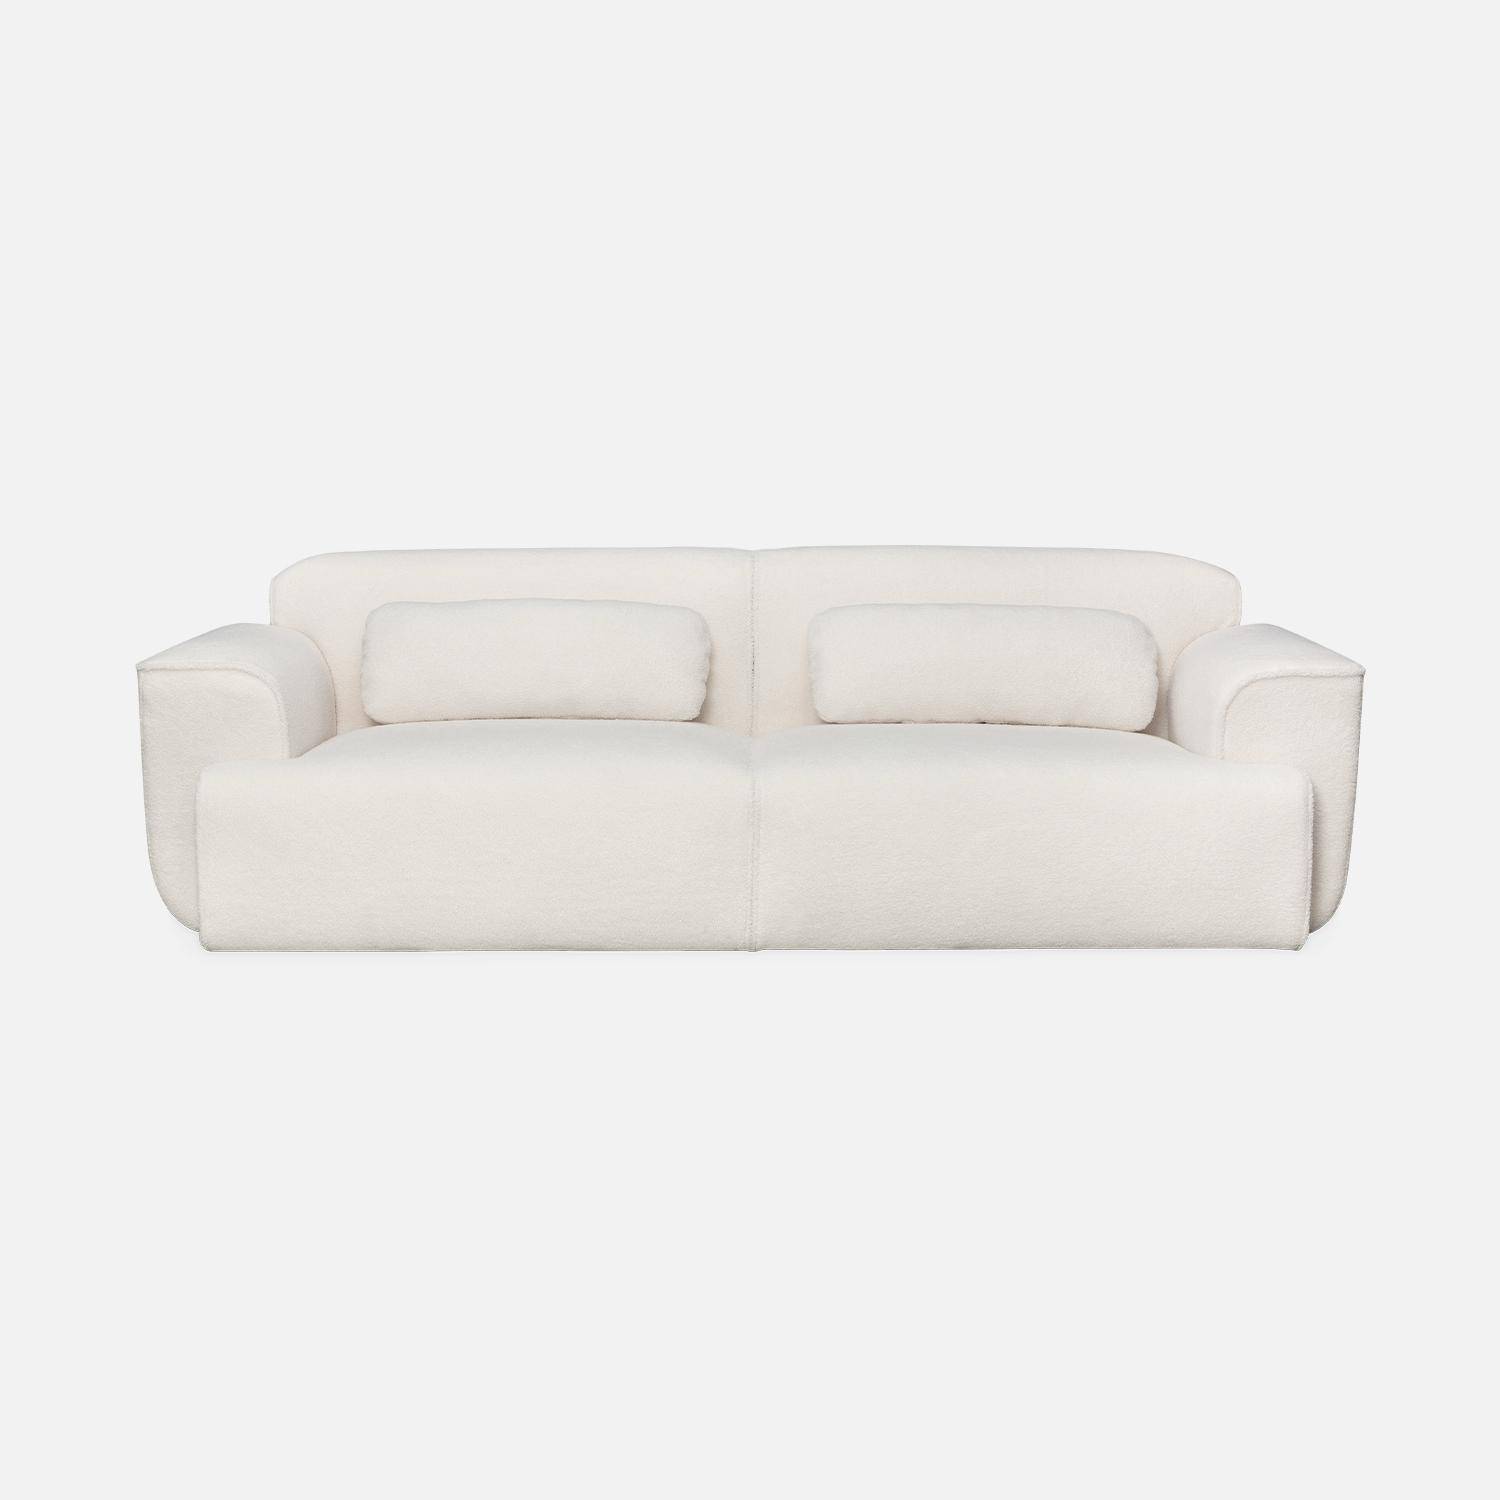 3-Seater Boucle Sofa, polyester,  L230xW98xH73cm, white,sweeek,Photo7